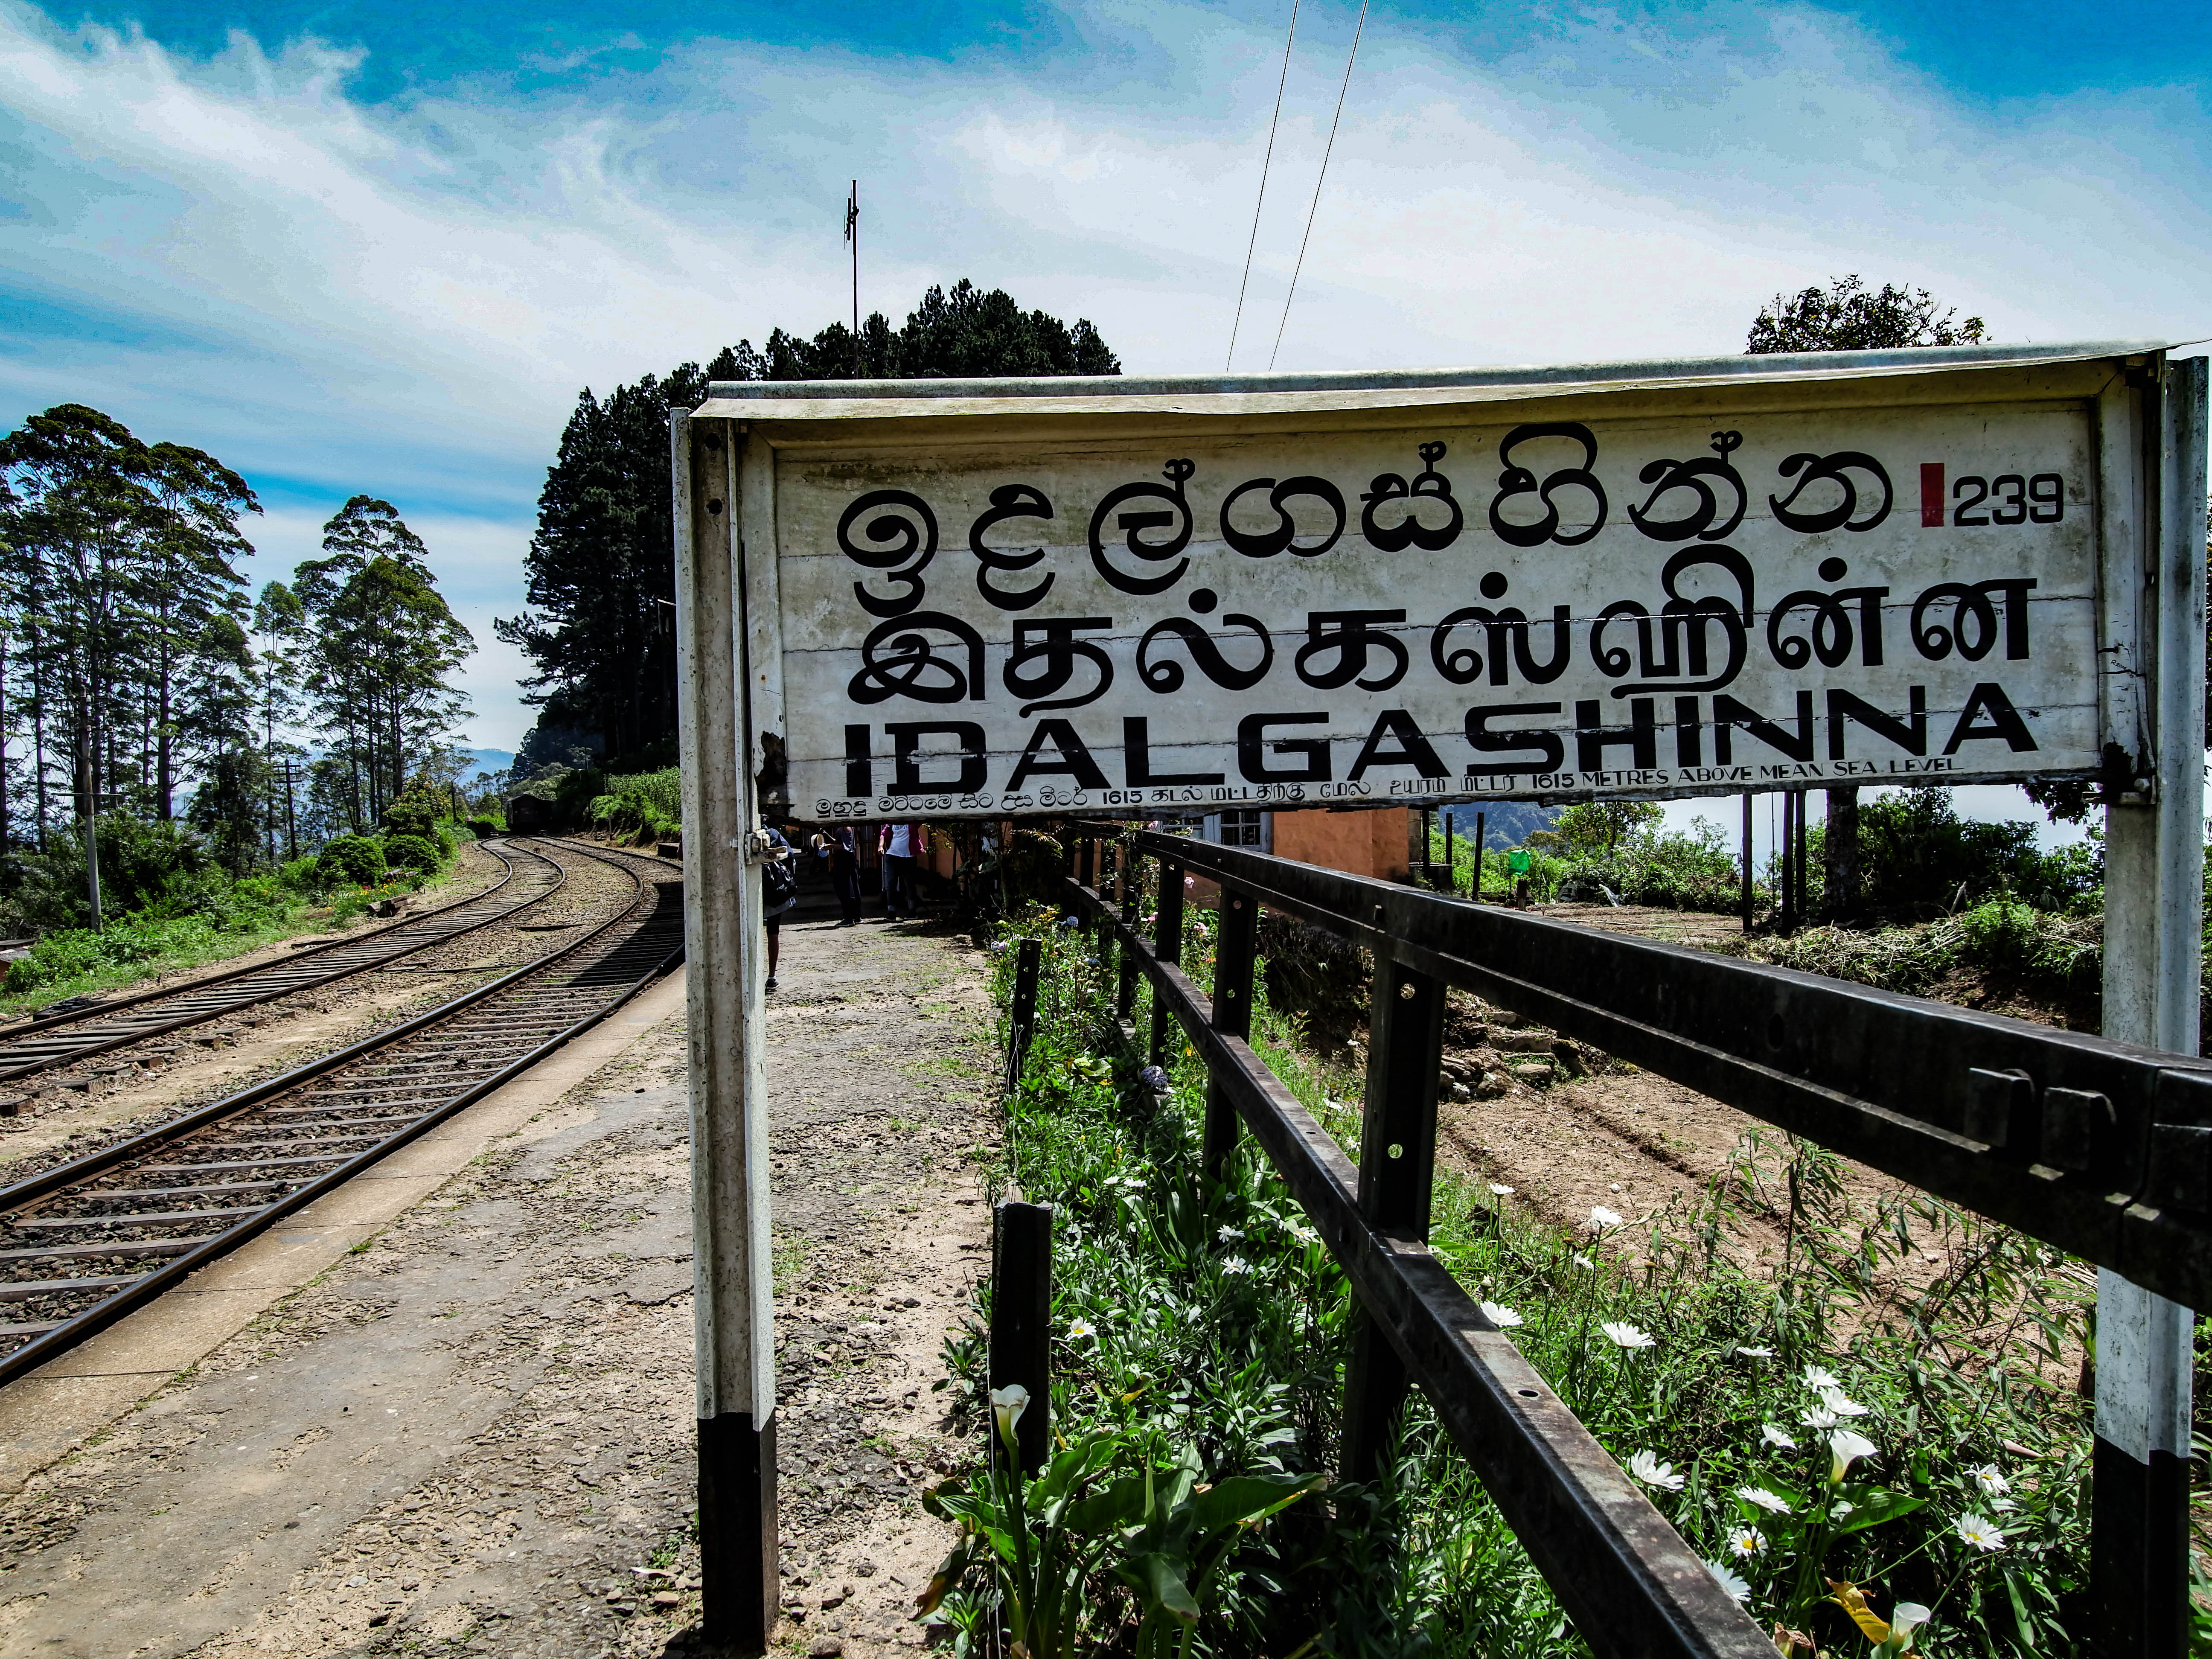 Idalgashina, Sri Lanka railway station at 5,299 ft, 